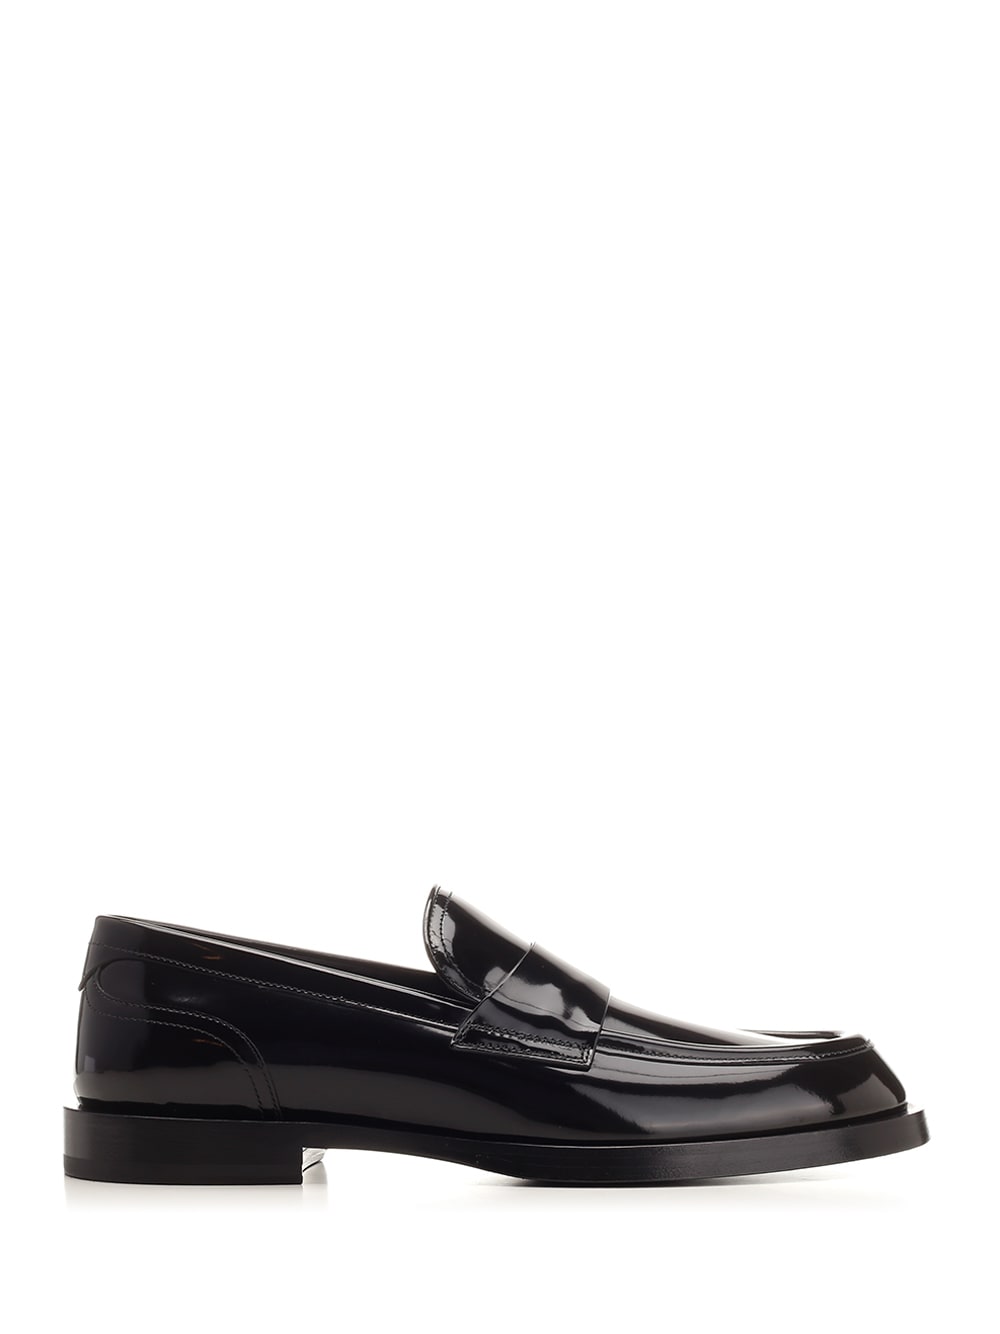 Dolce & Gabbana Glossy Black Loafer In Nero